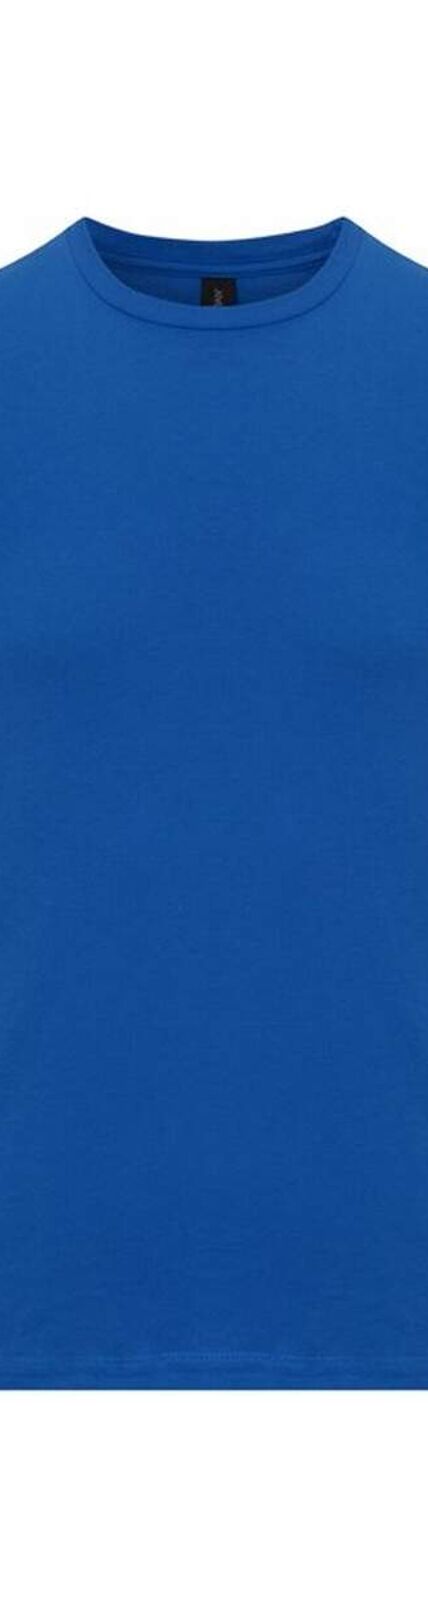 Gildan - T-shirt - Adulte (Bleu roi) - UTRW9215